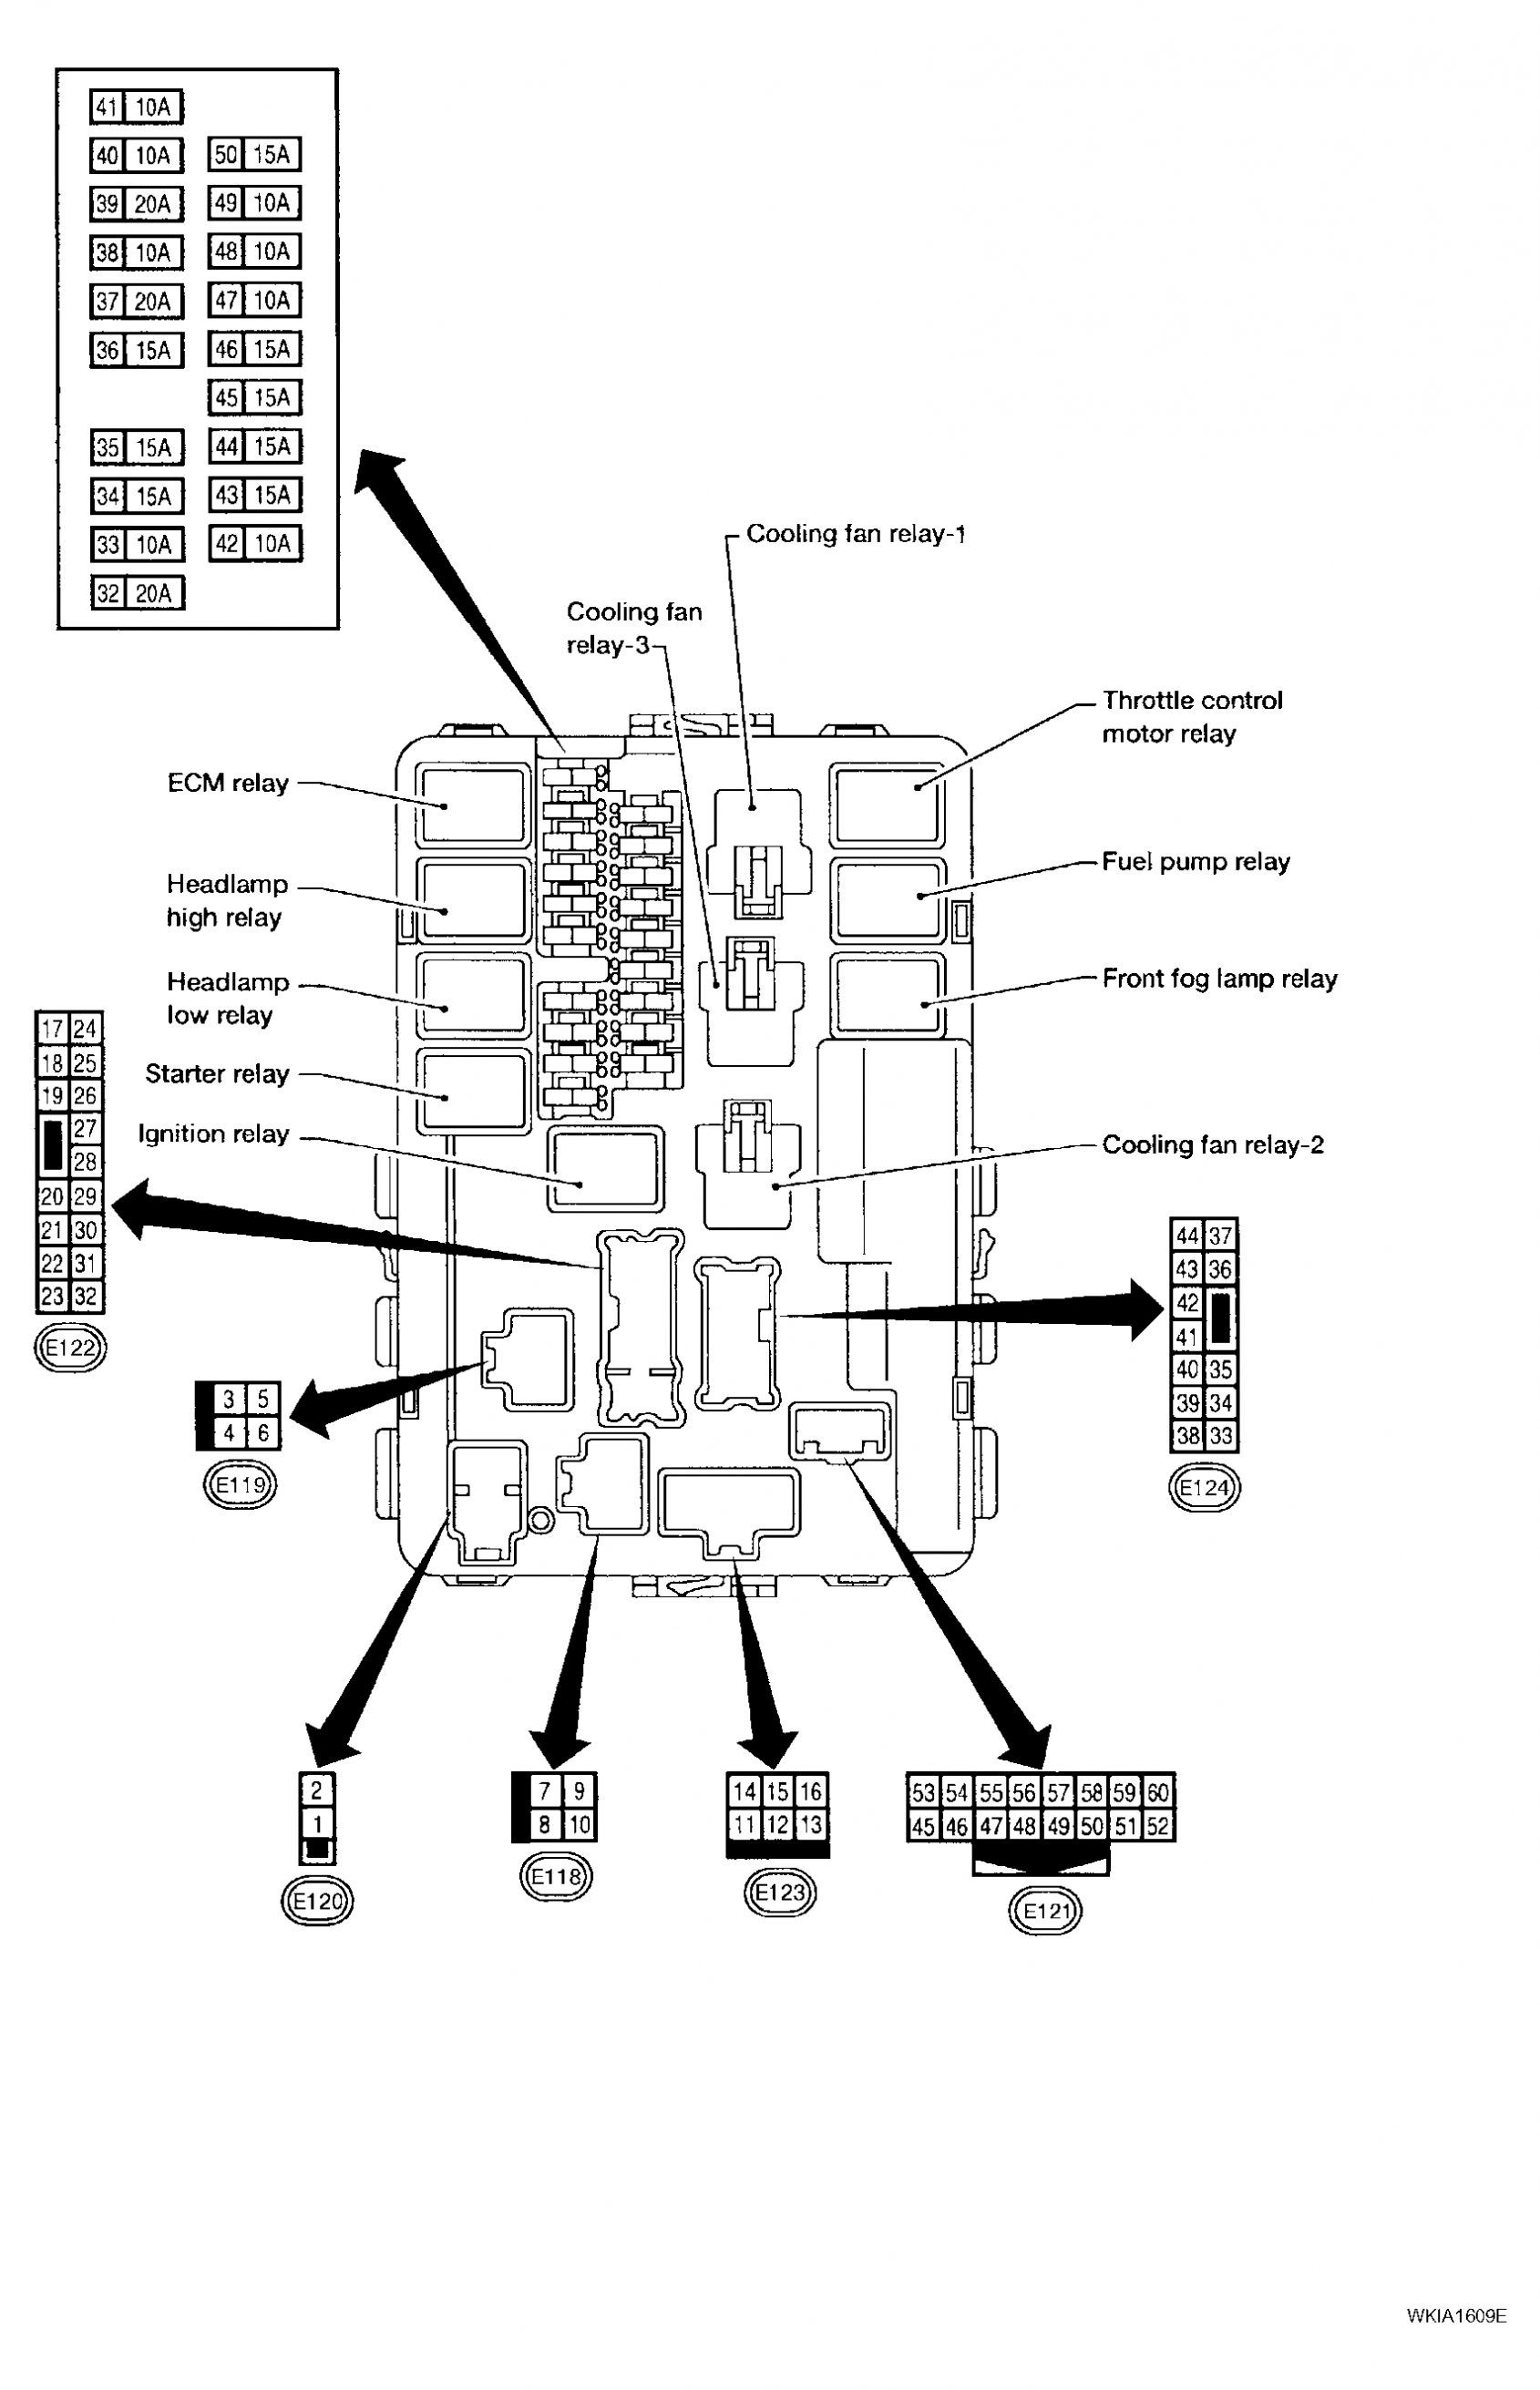 1996 Nissan Maxima Engine Diagram 2000 Nissan Pathfinder Fuse Box Diagram Wiring Diagram Used Of 1996 Nissan Maxima Engine Diagram